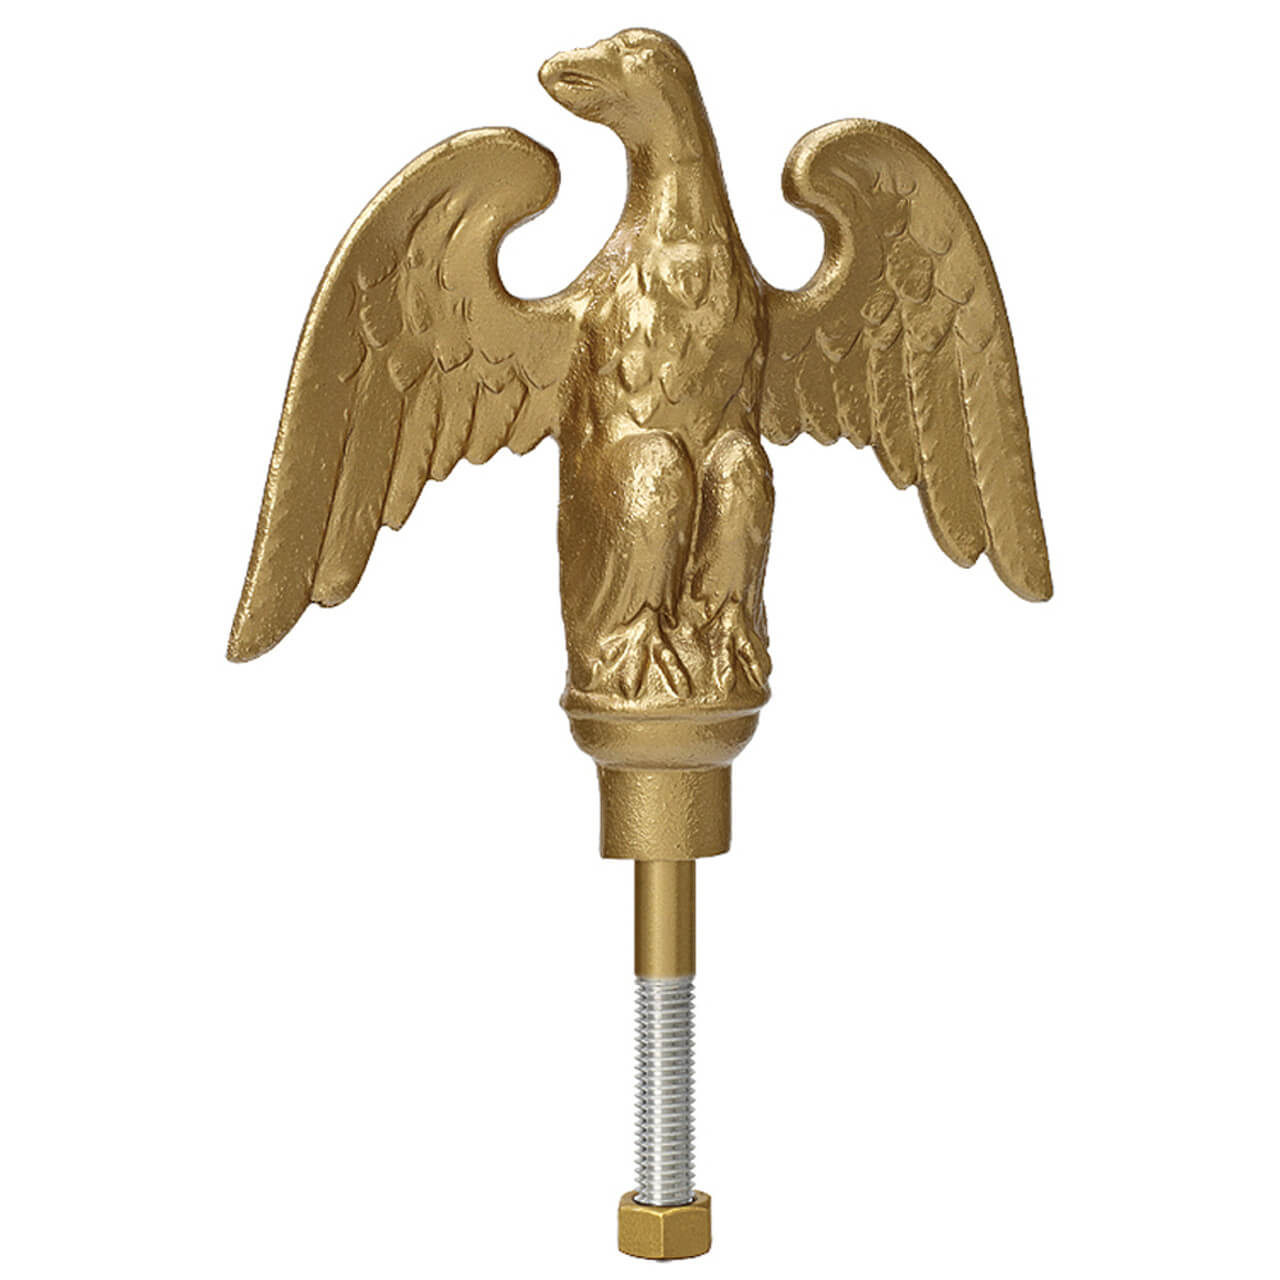 Gold Cast Aluminum Landed Eagle Ball Flagpole Ornament